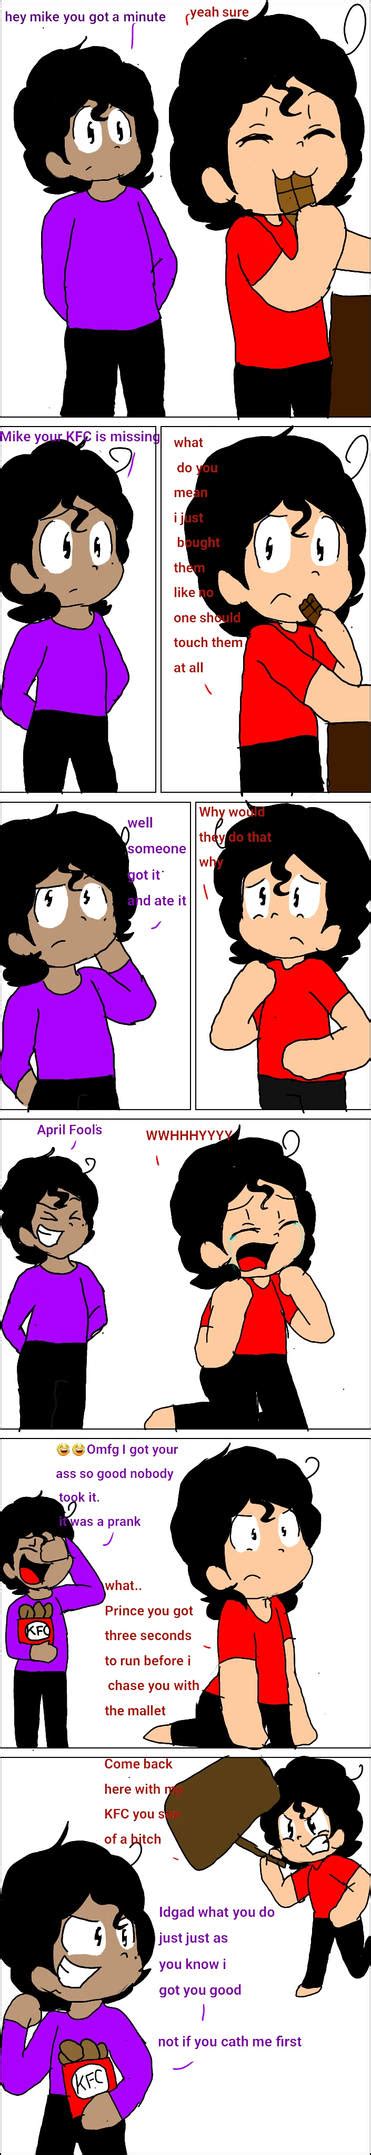 Prince And Michael Jackson Comic April Fools By Mjackson5 On Deviantart